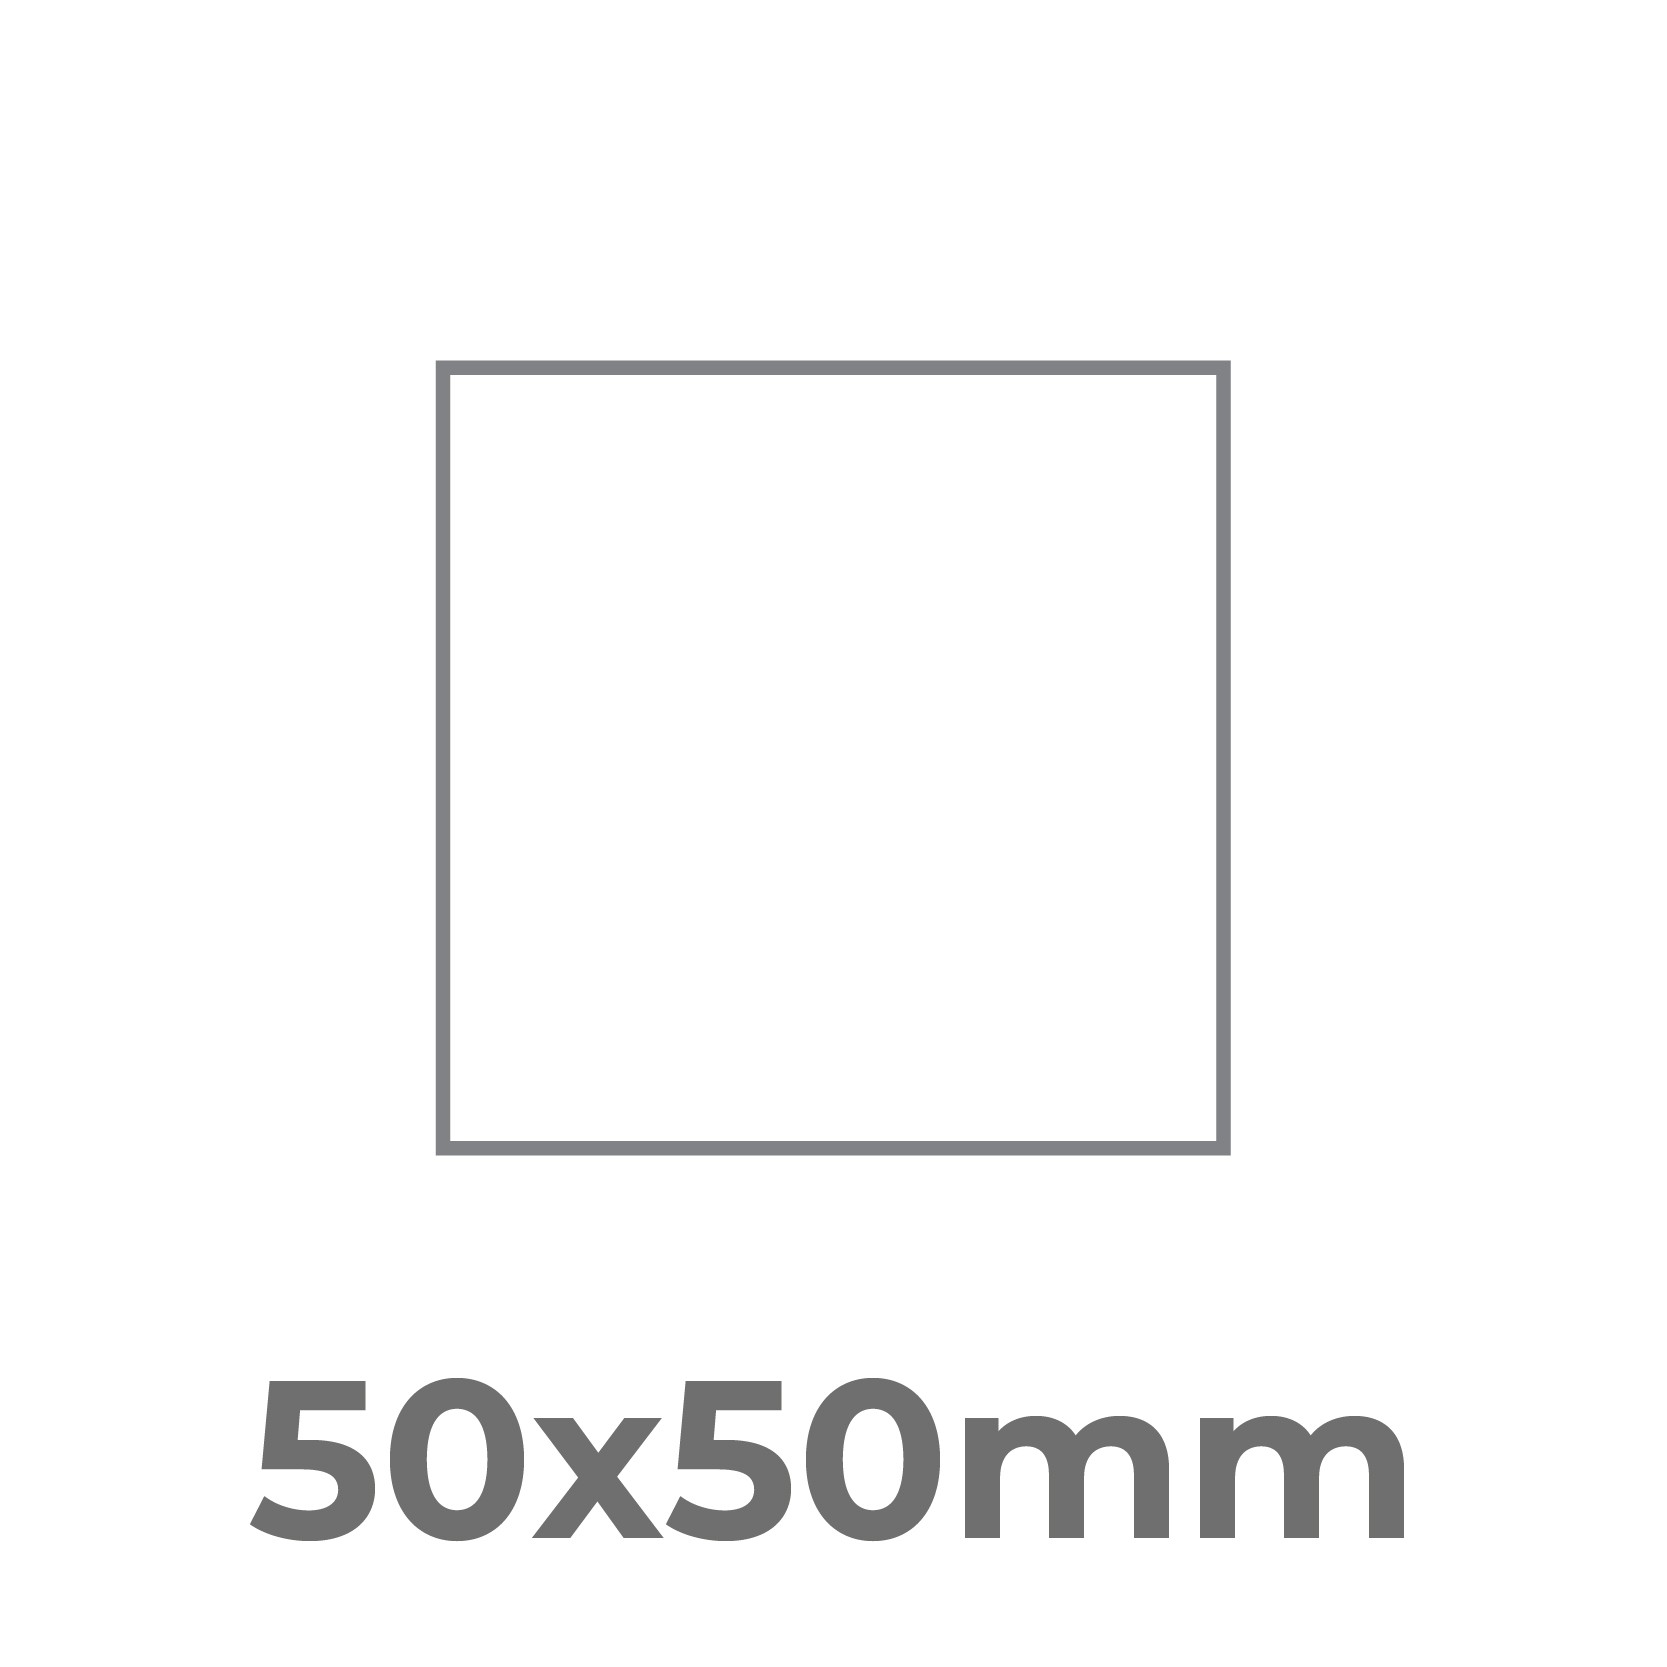 50x50 mm.